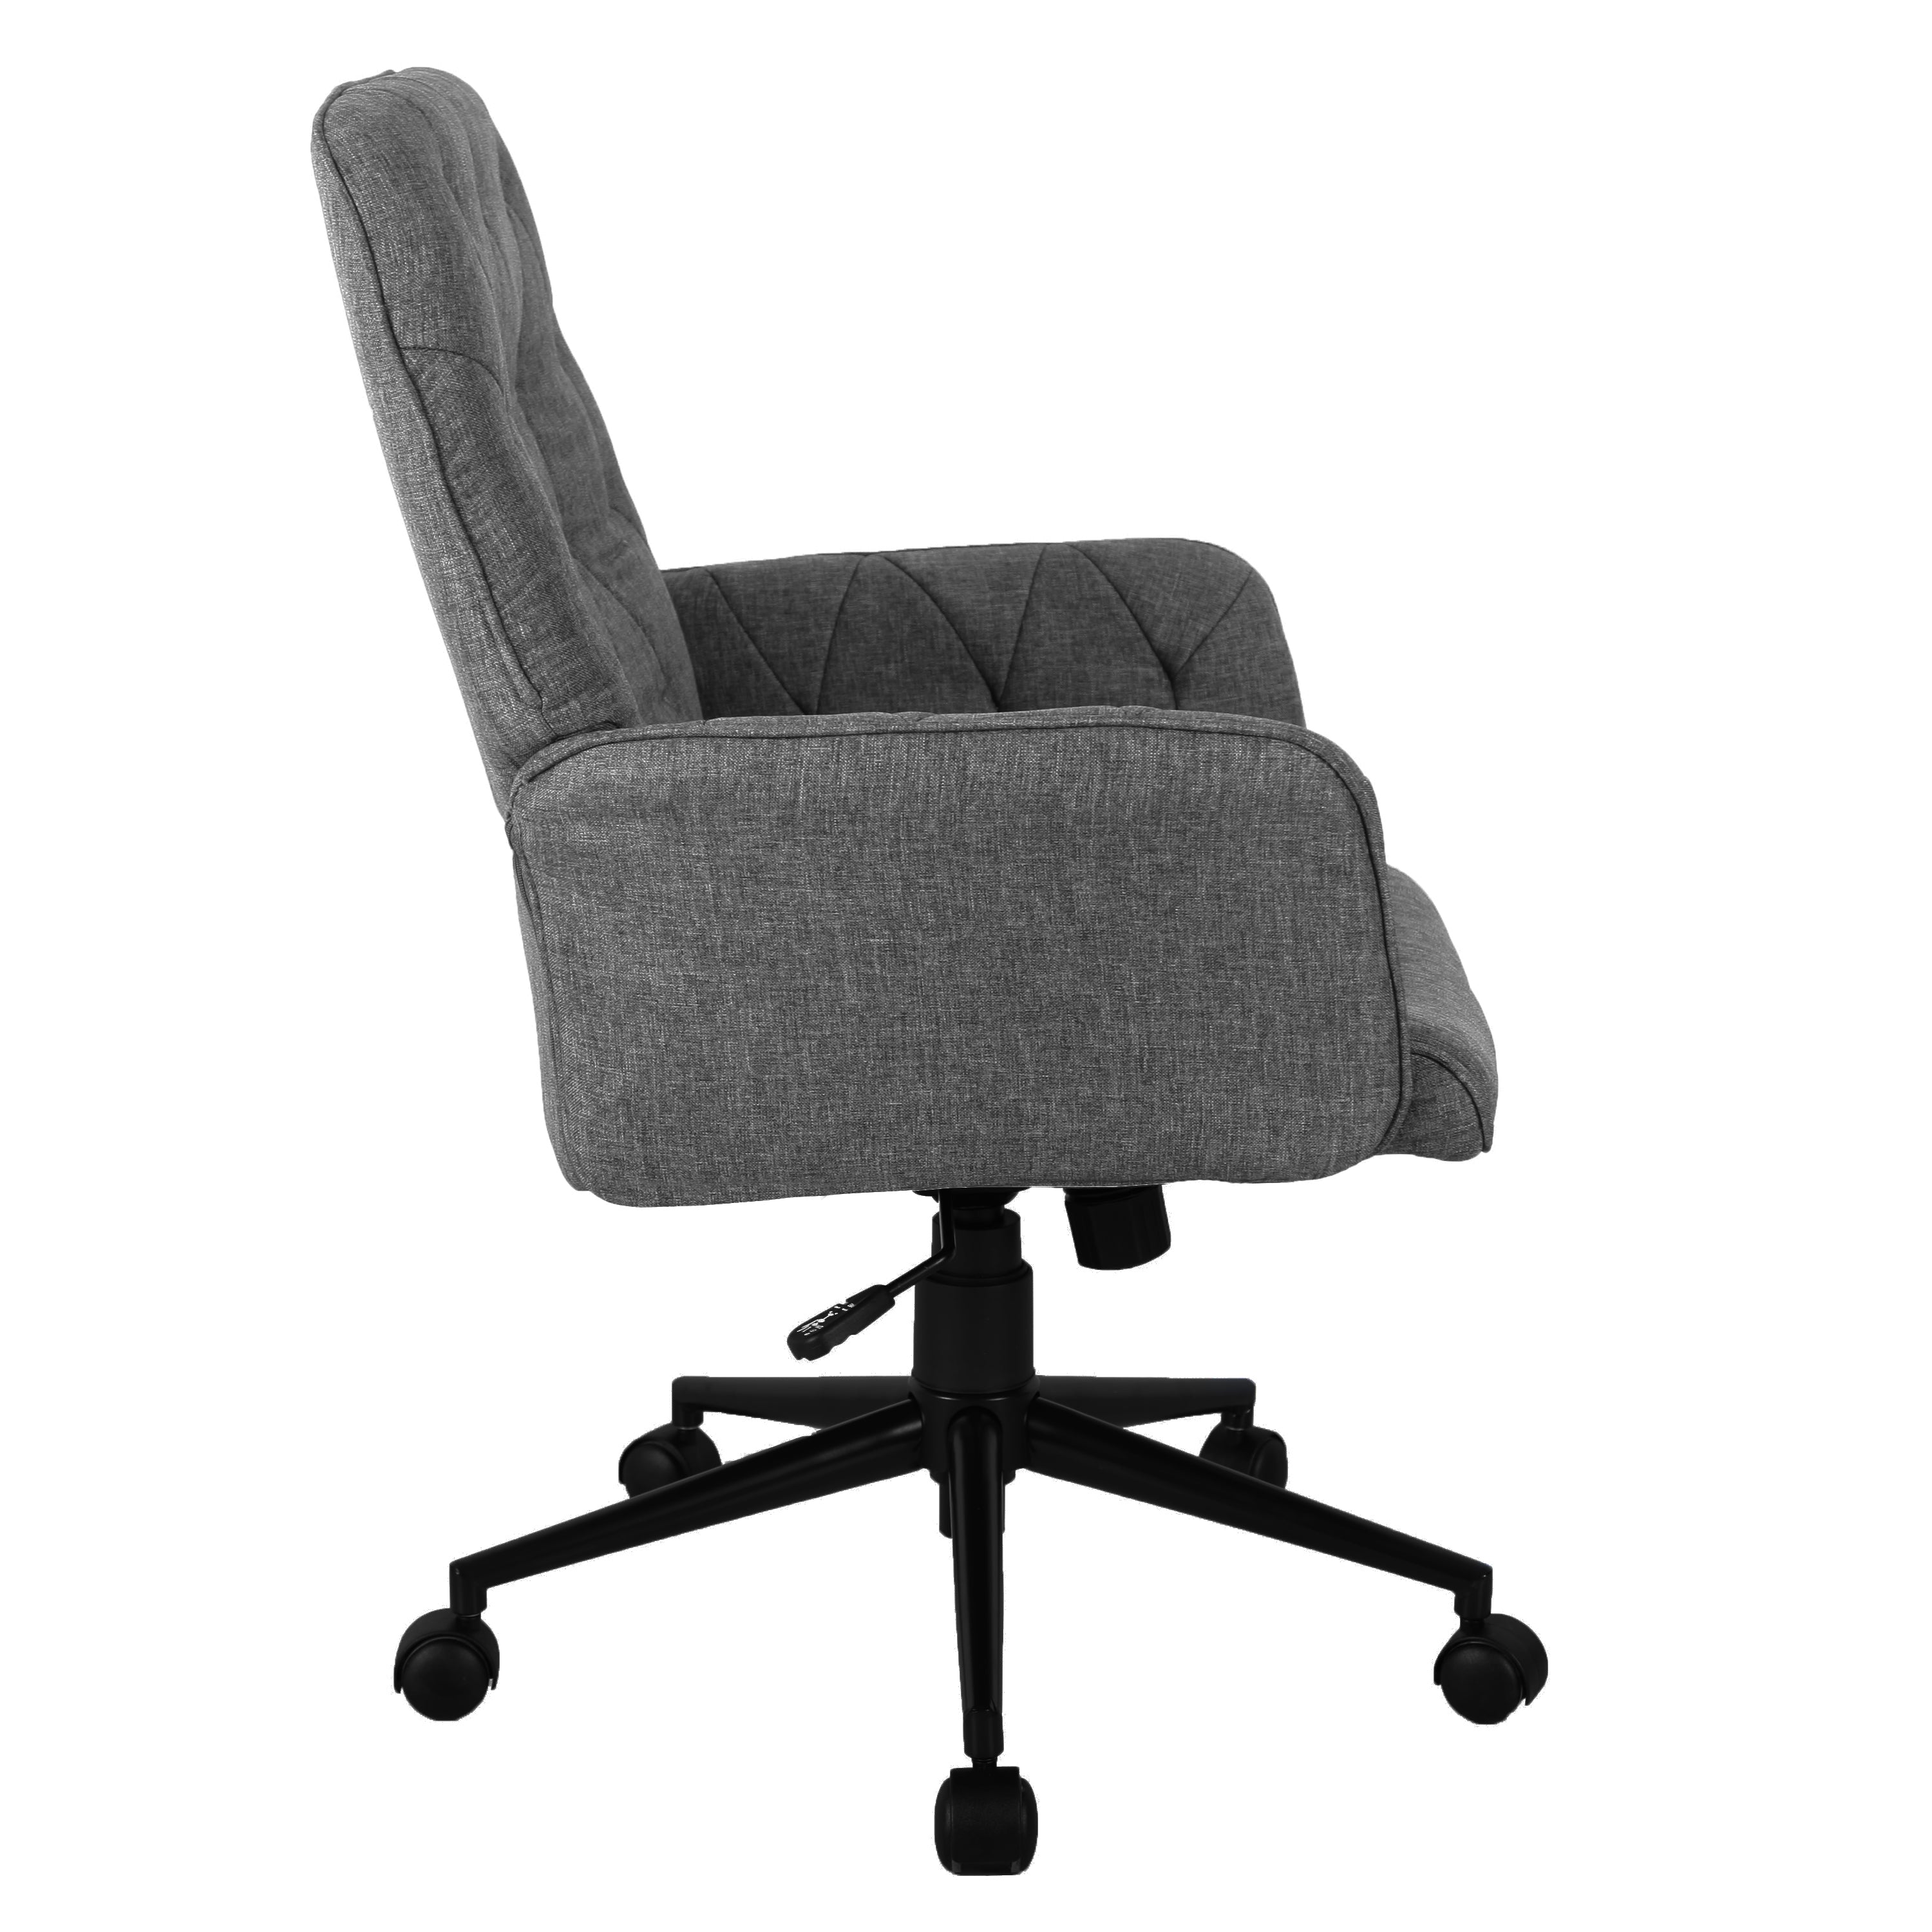 HOMCOM Modern Tufted Home Office Chair